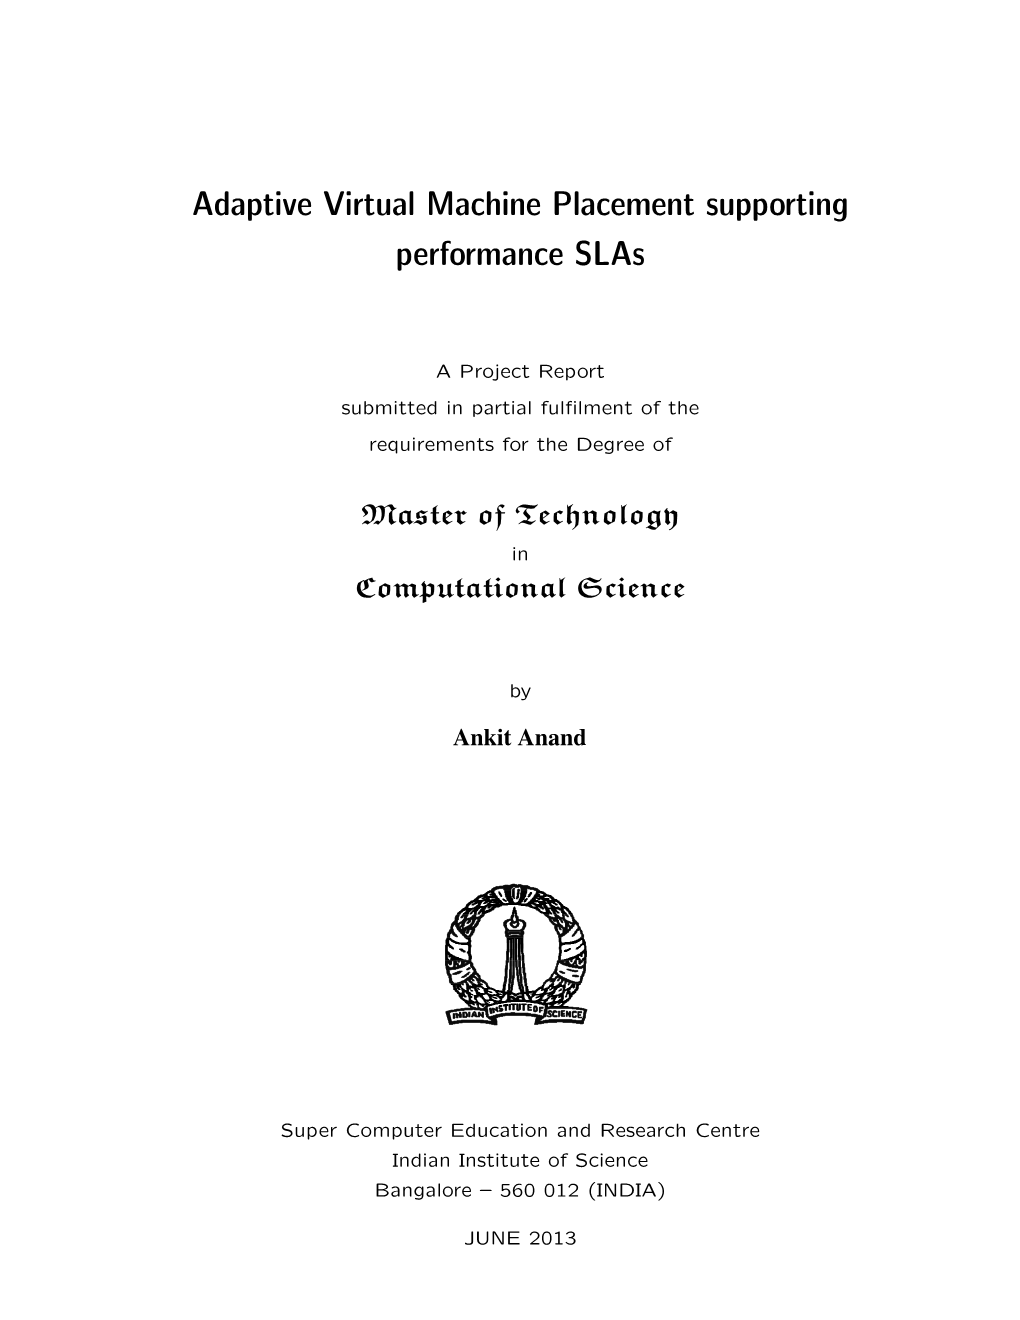 Adaptive Virtual Machine Placement Supporting Performance Slas